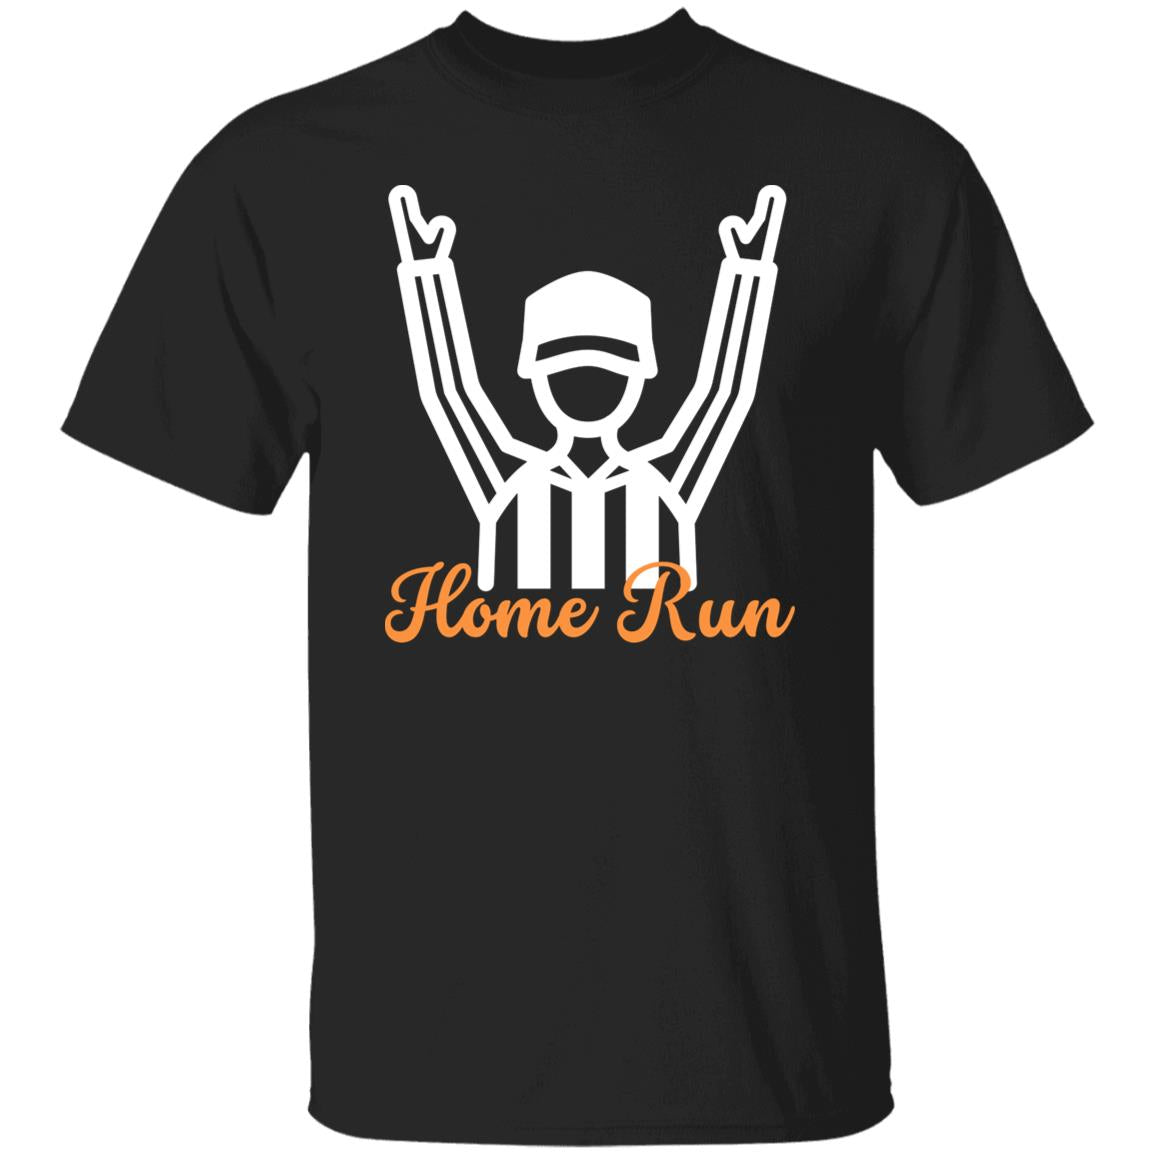 Home Run - Adult Utility T-Shirt